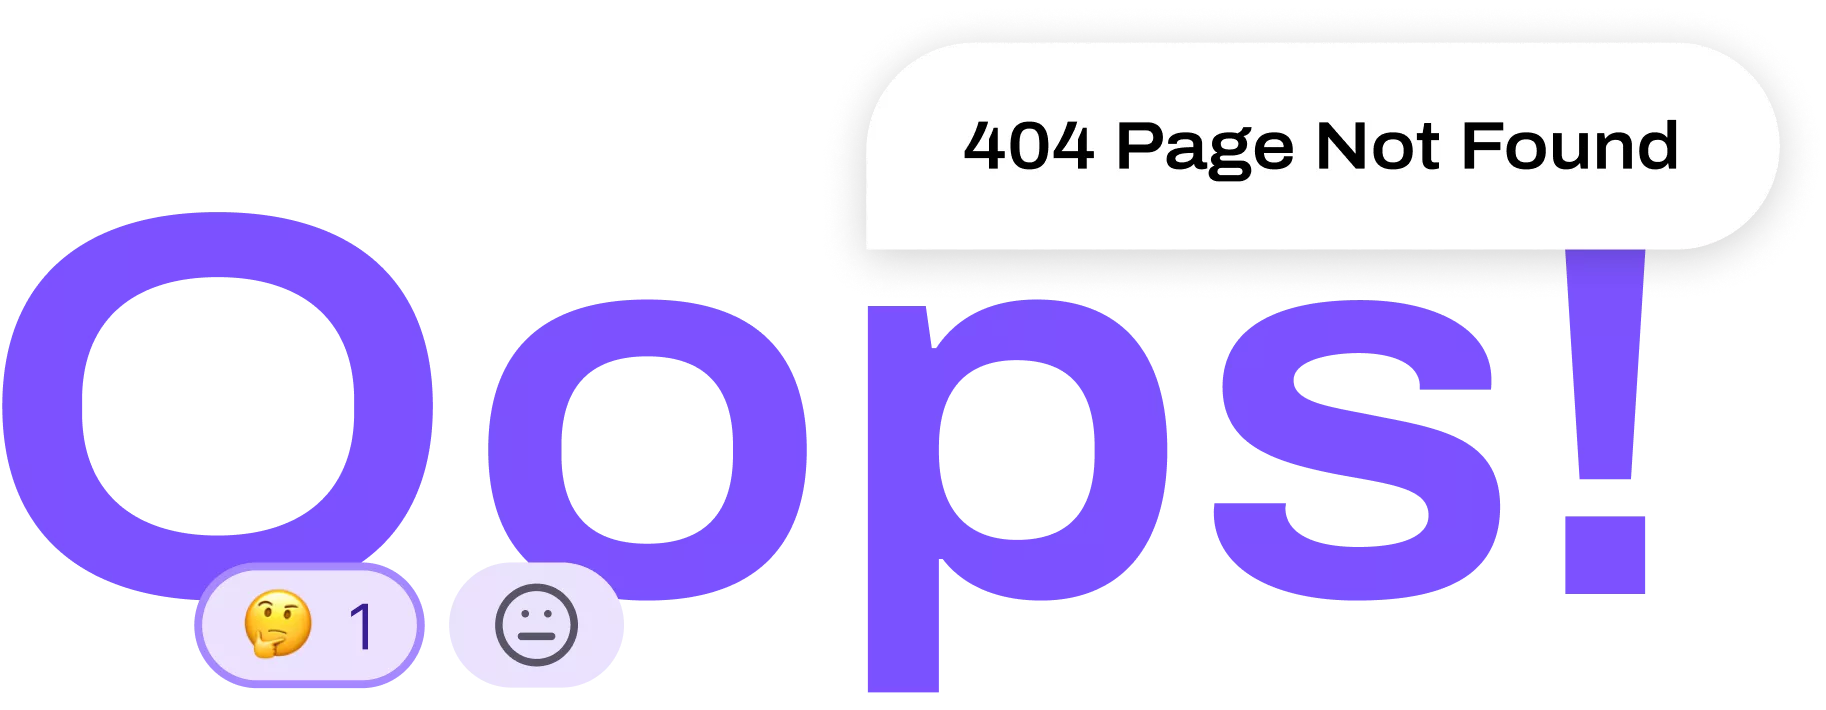 404 placeholder image